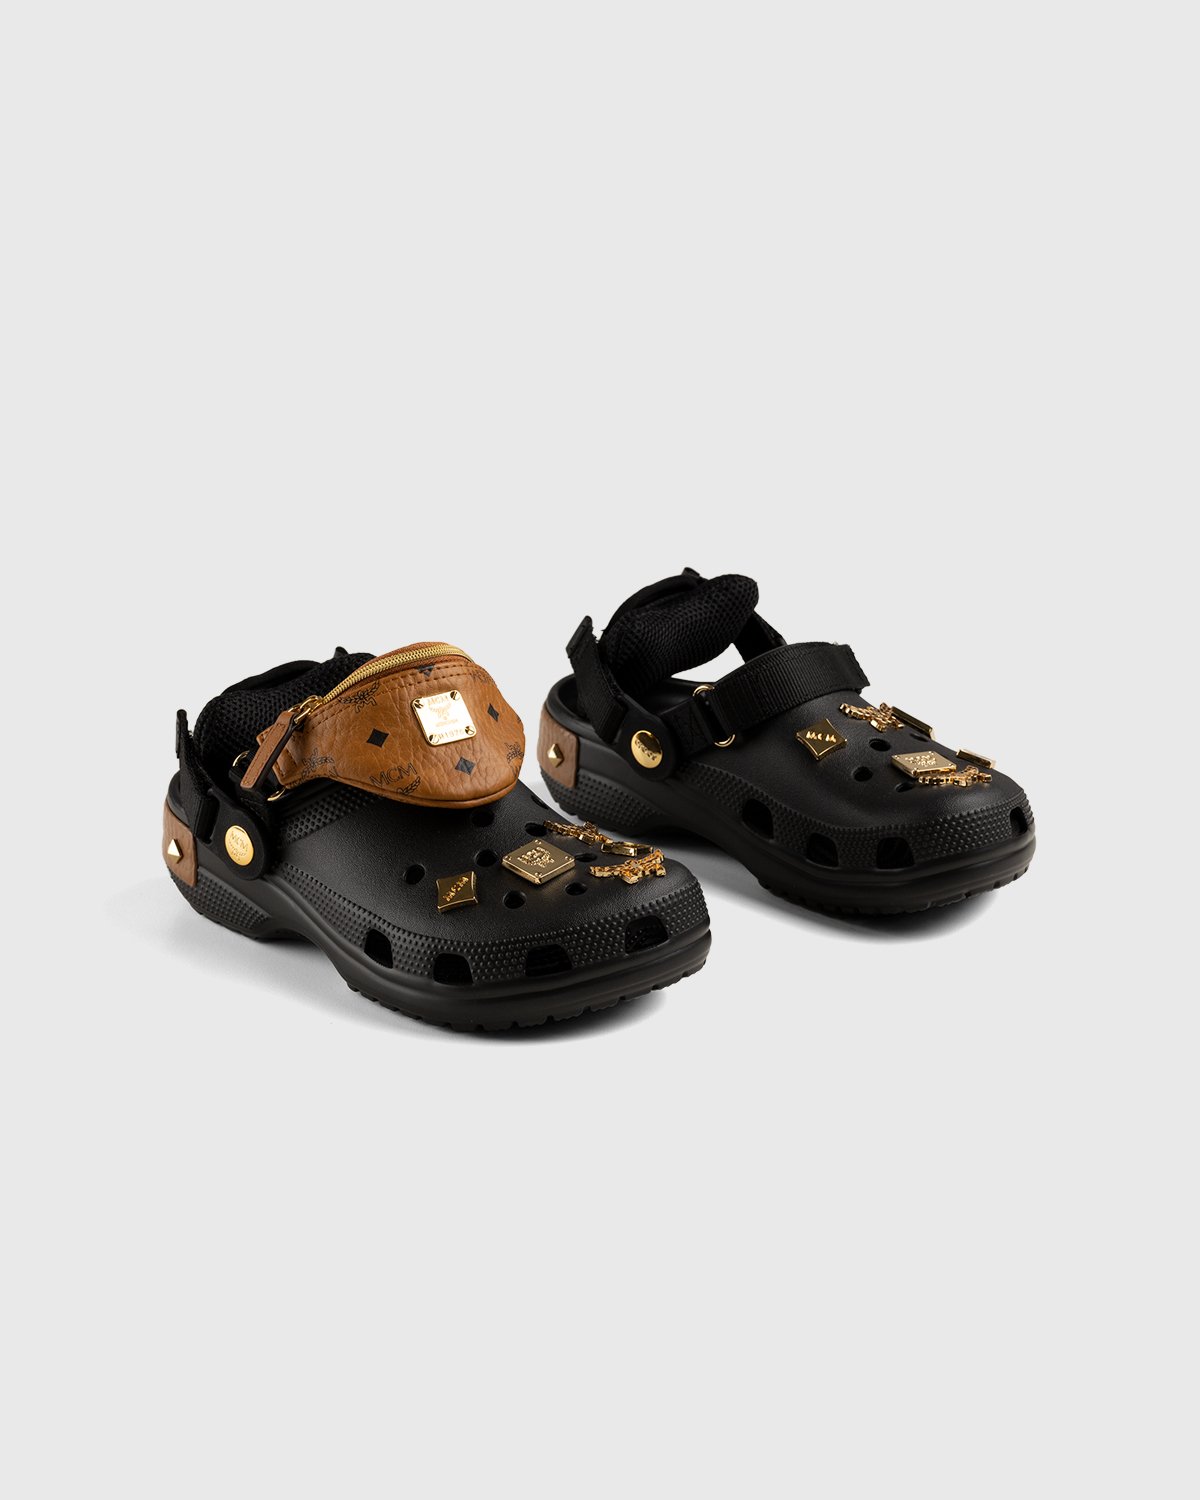 MCM x Crocs - Belt Bag Clog Black - Footwear - Black - Image 4